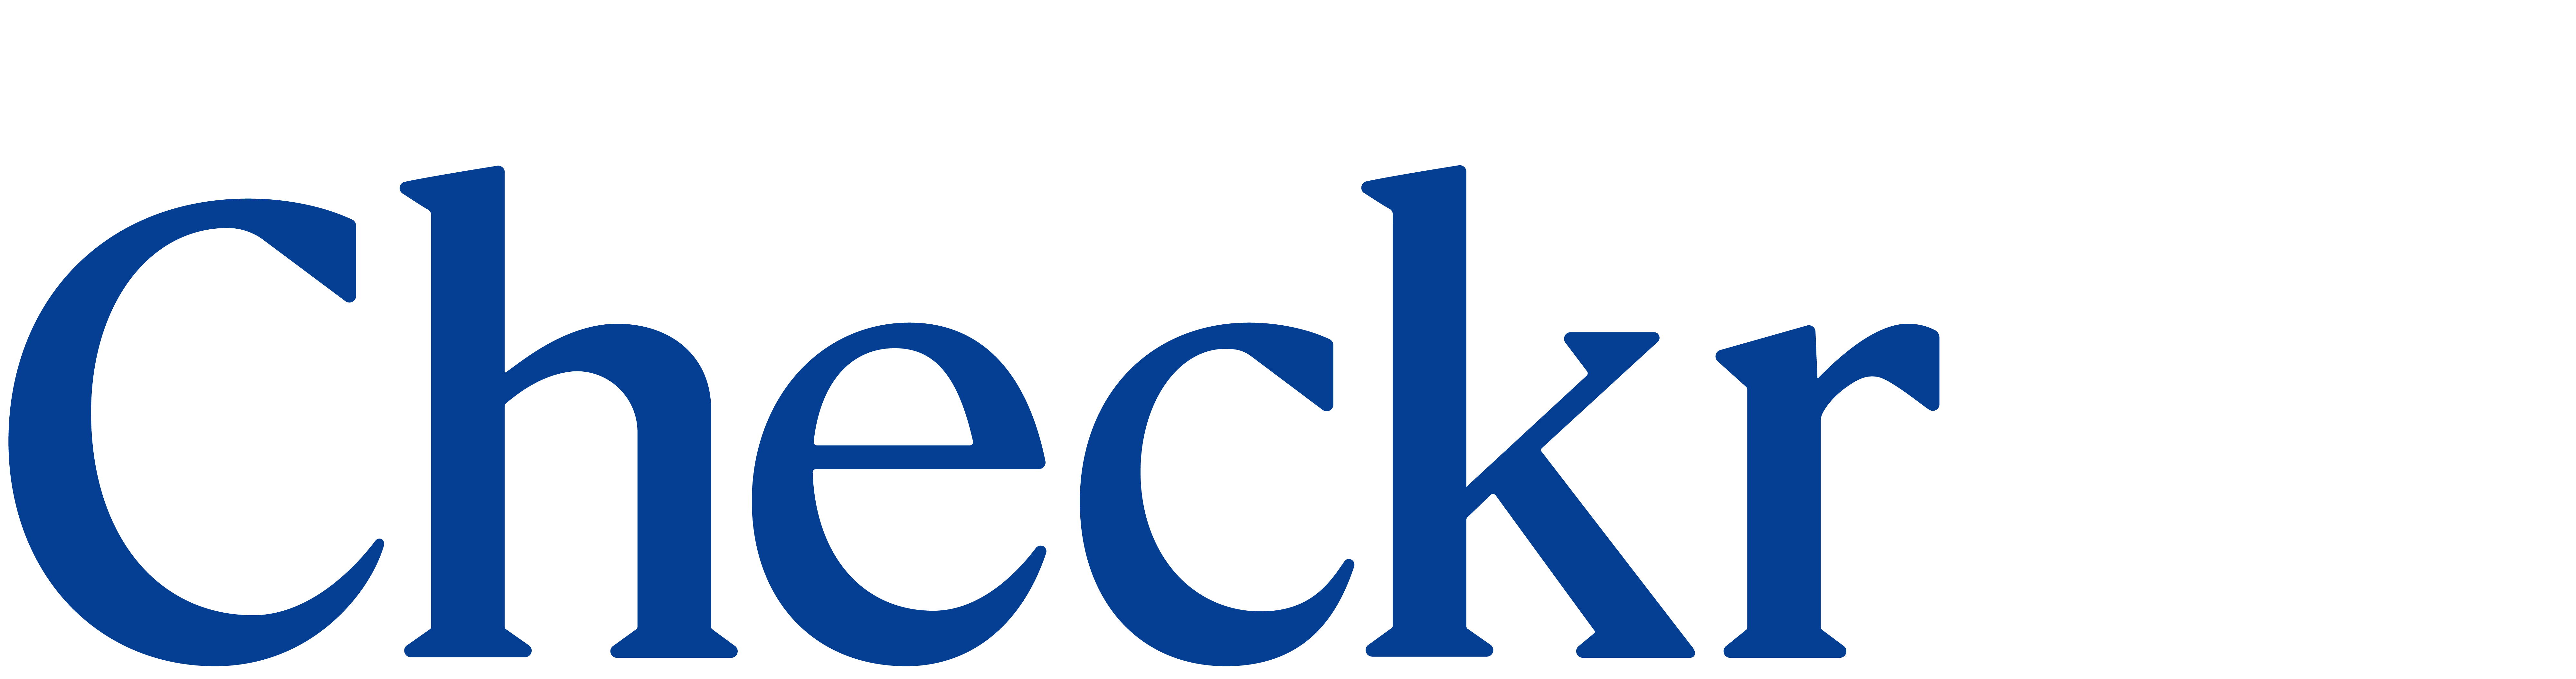 checkr-cs logo